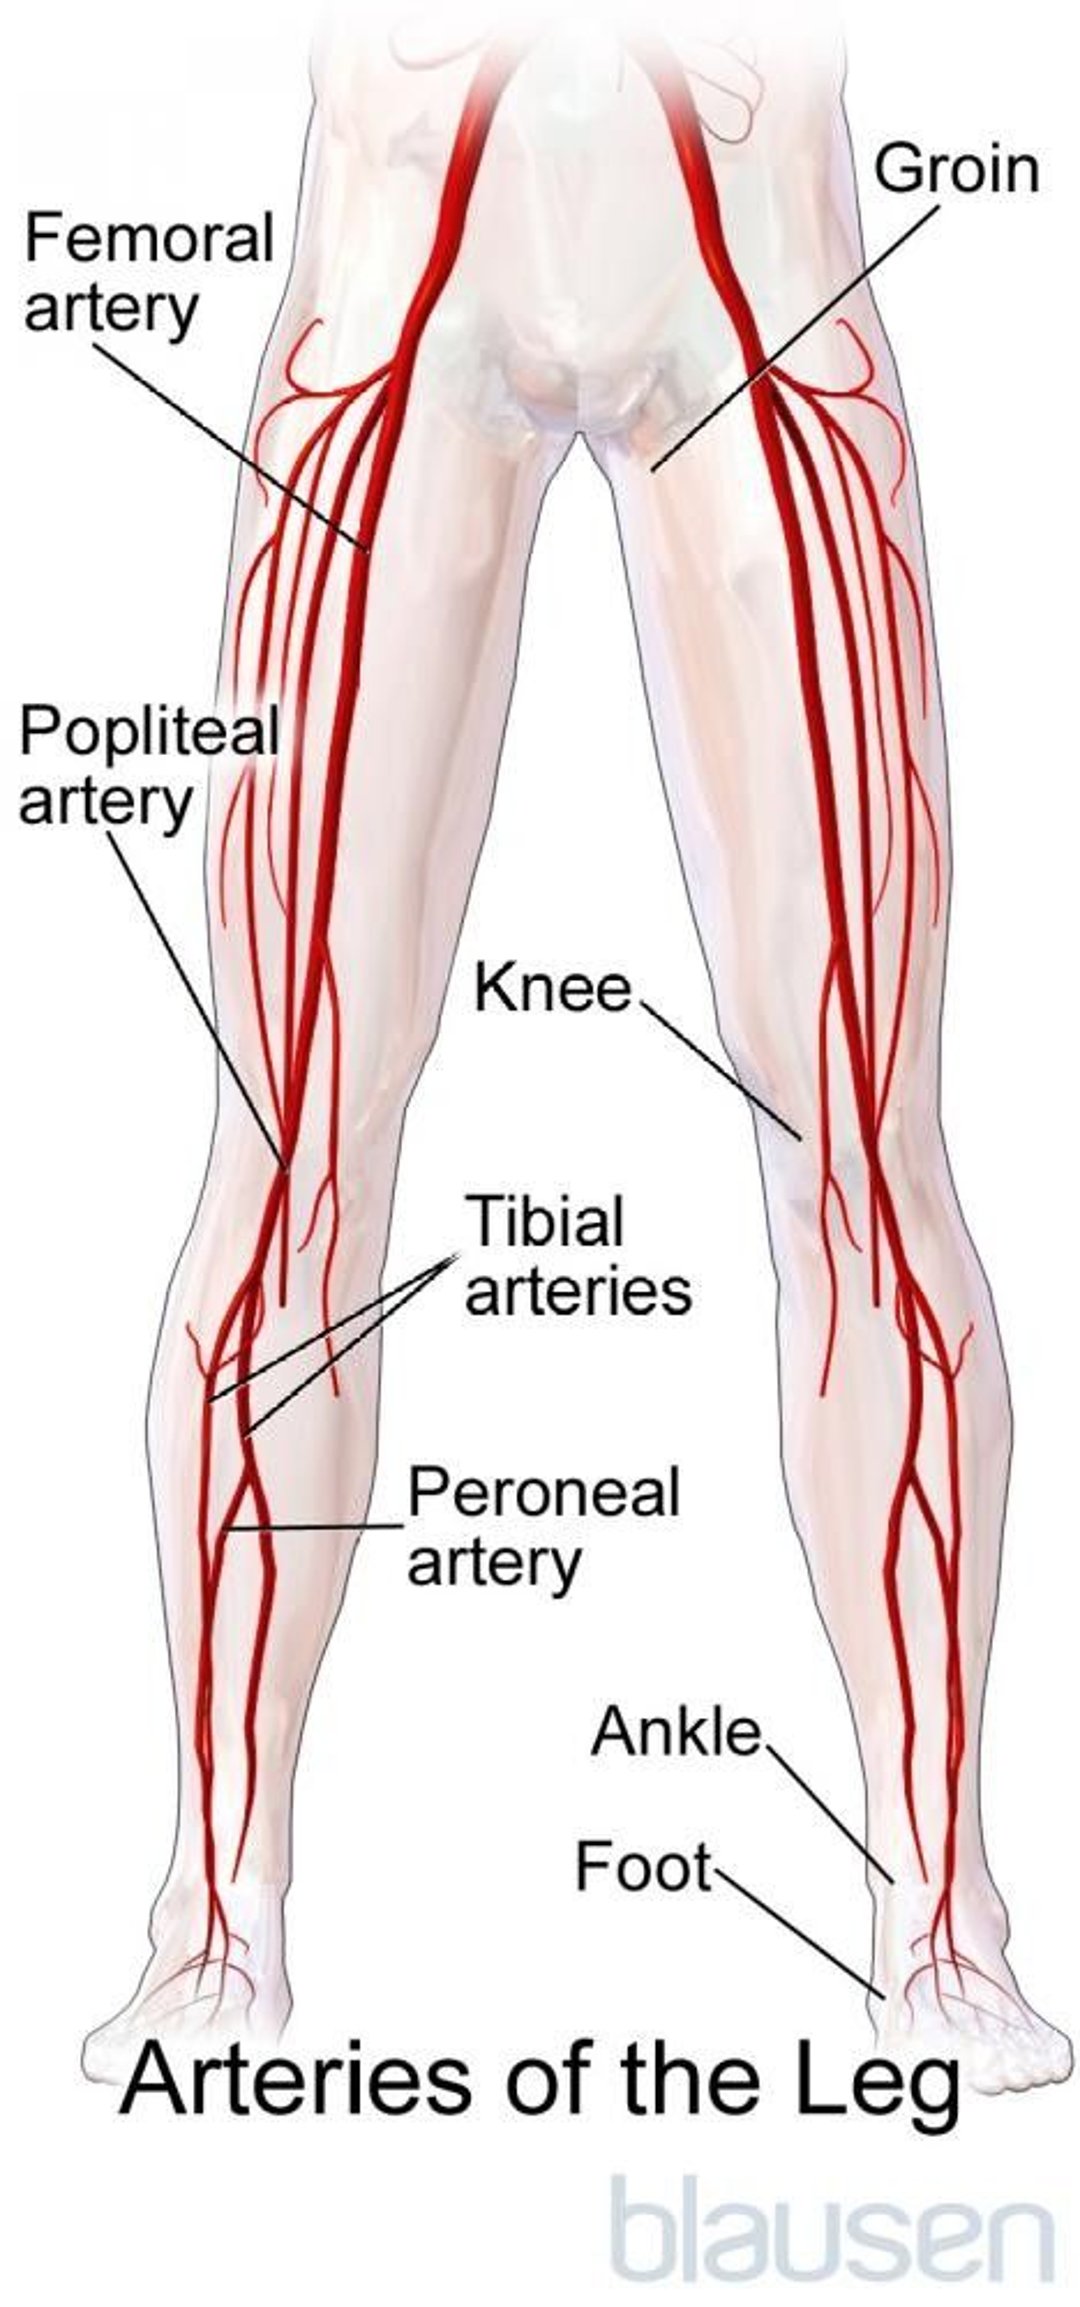 Arteries of the Leg